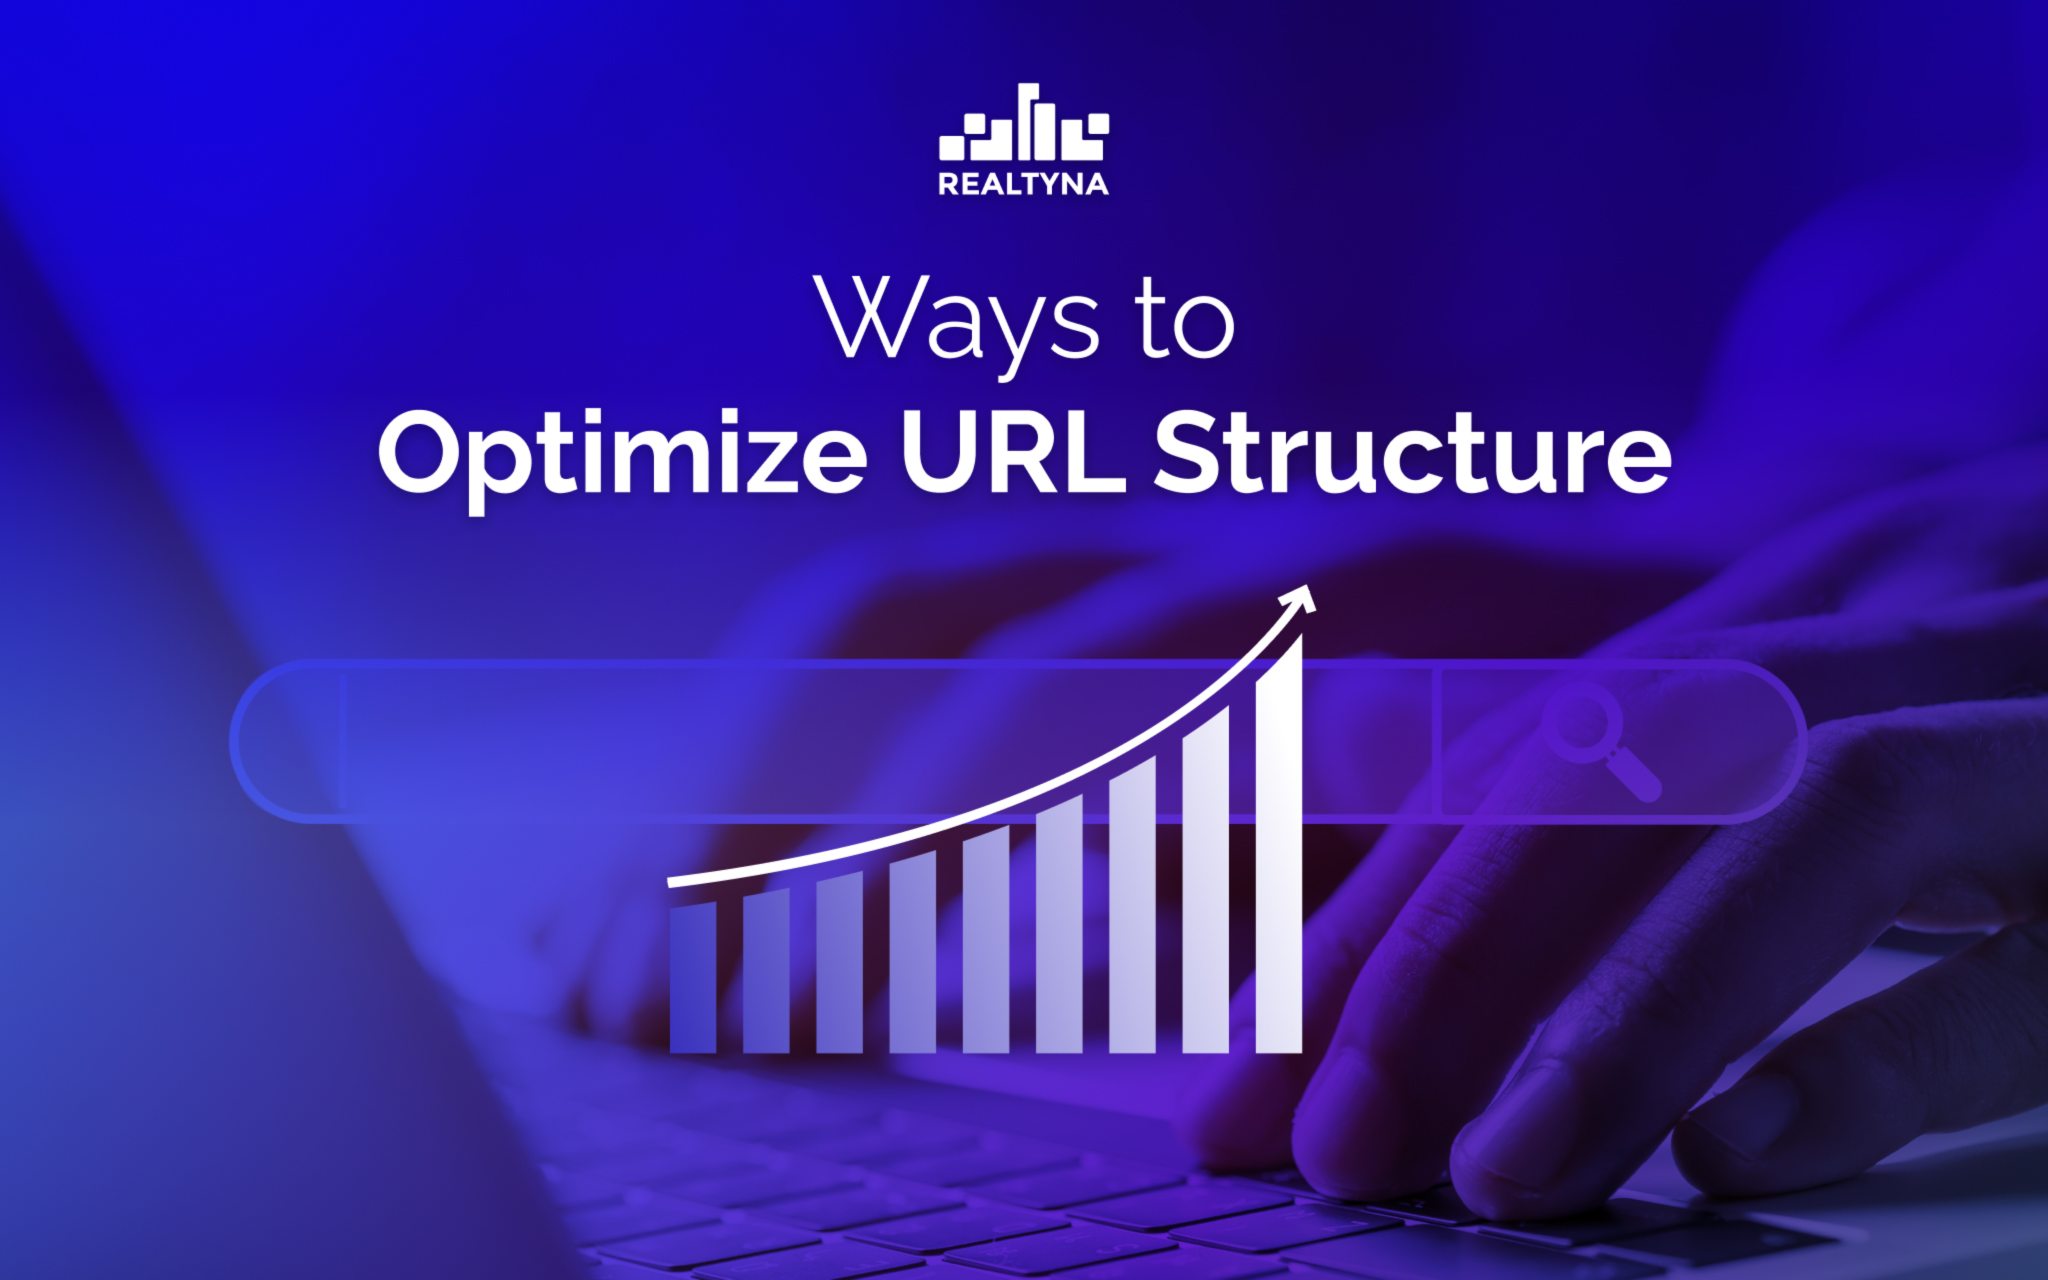 rna url structure guide 2